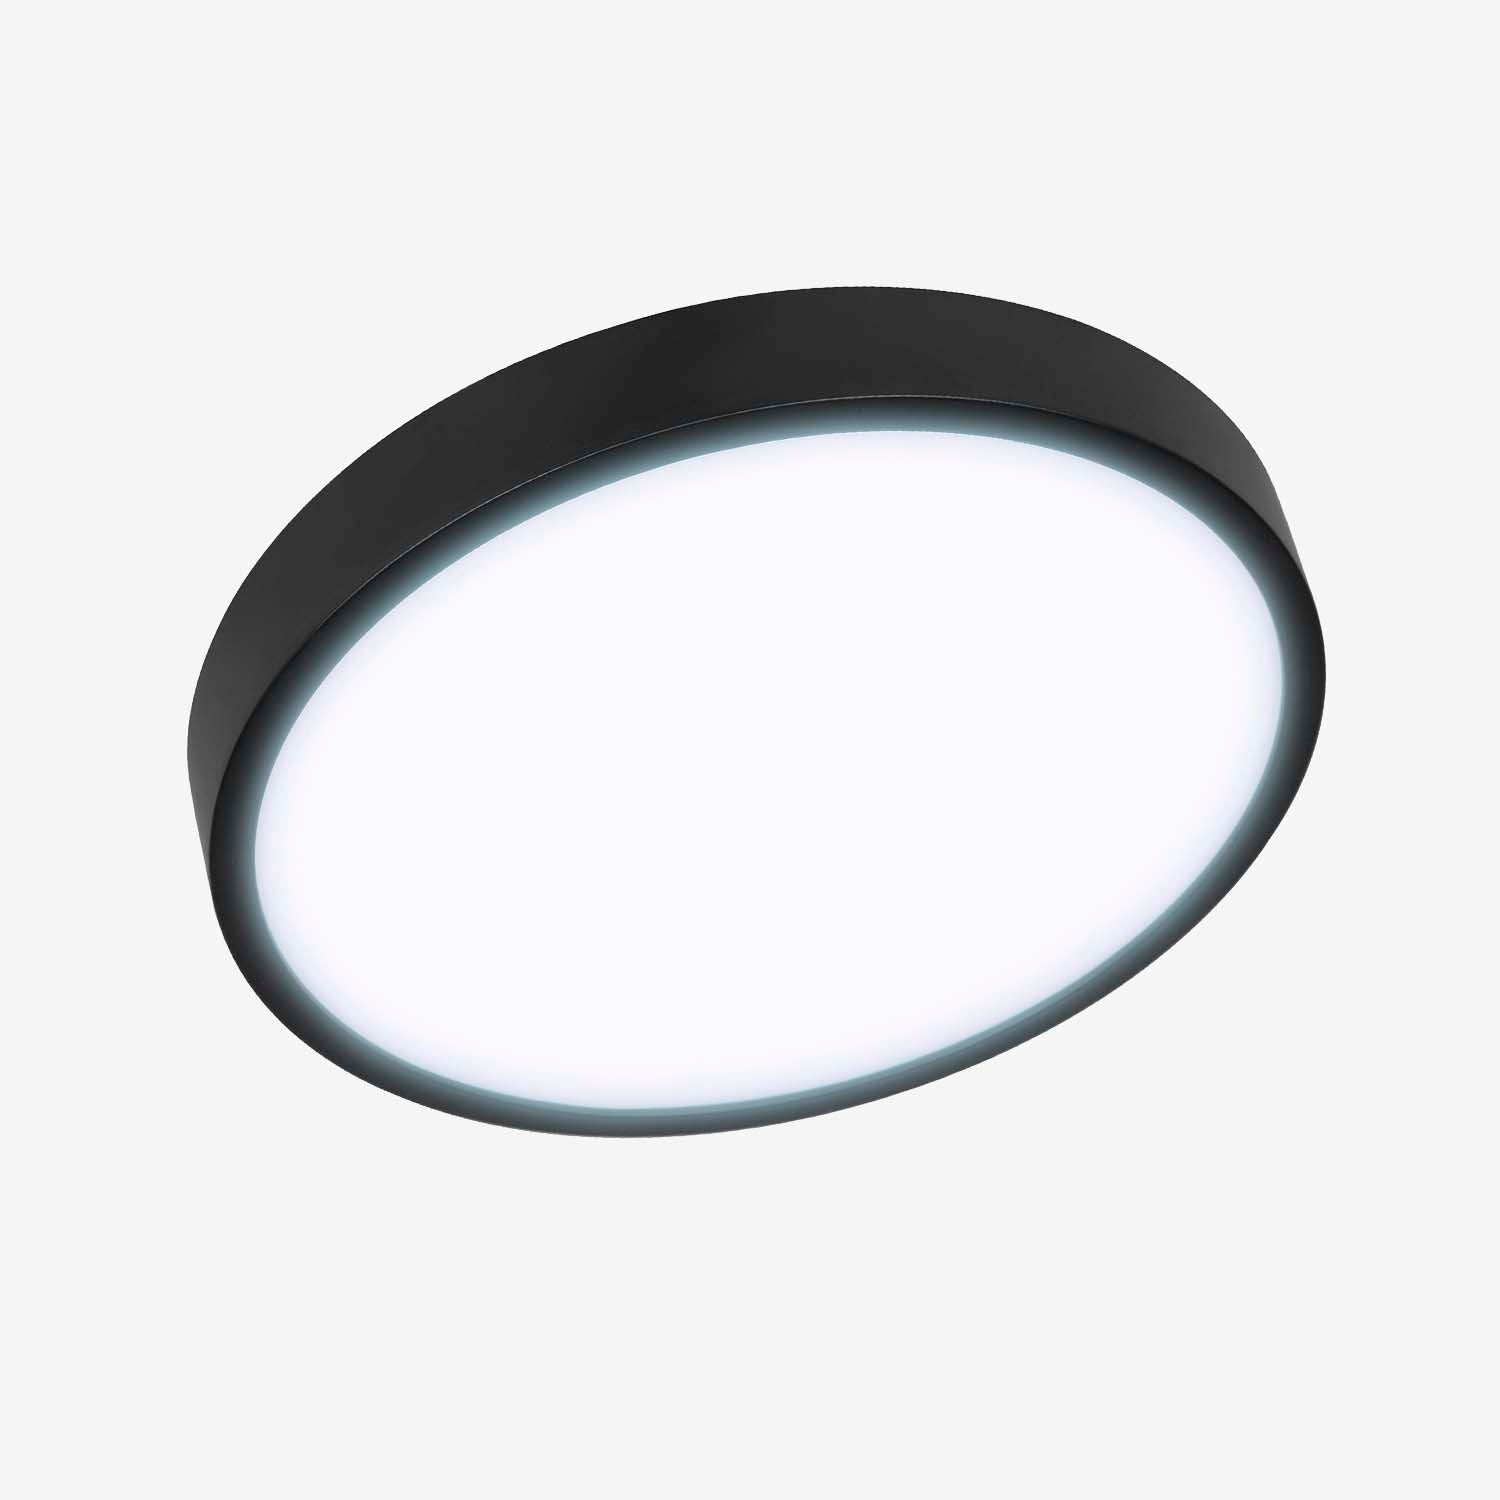 Nuevo Lámpara redonda Illux Slim de sobreponer LED 18W, TL-2815